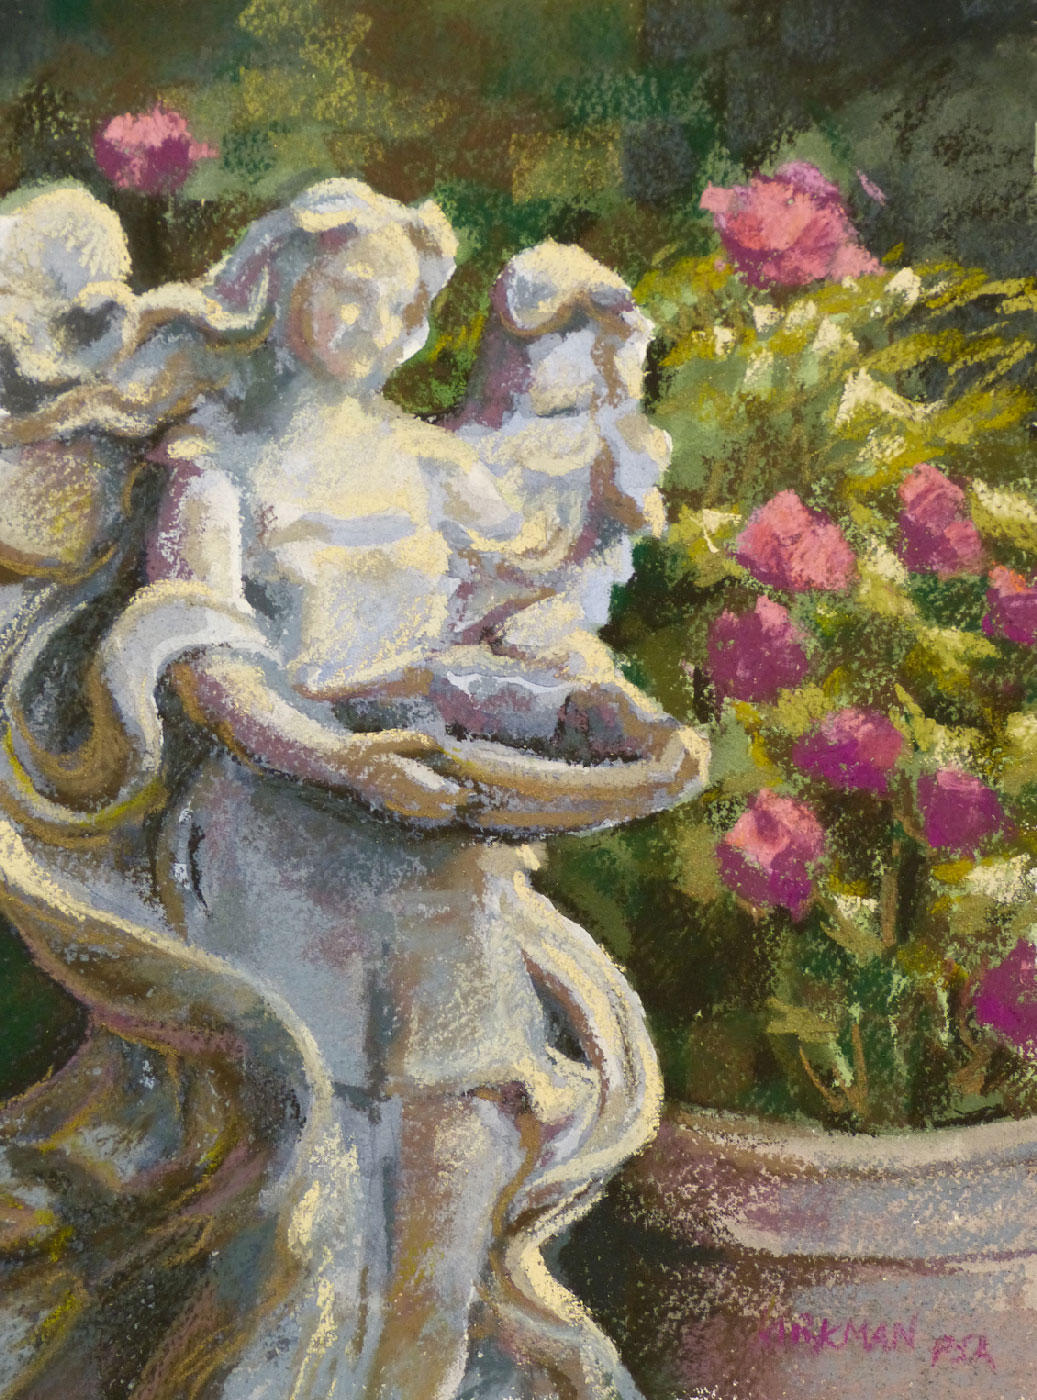 Rita Kirkman's Daily Paintings: Garden Angel (For Wimberley Flood Victims)